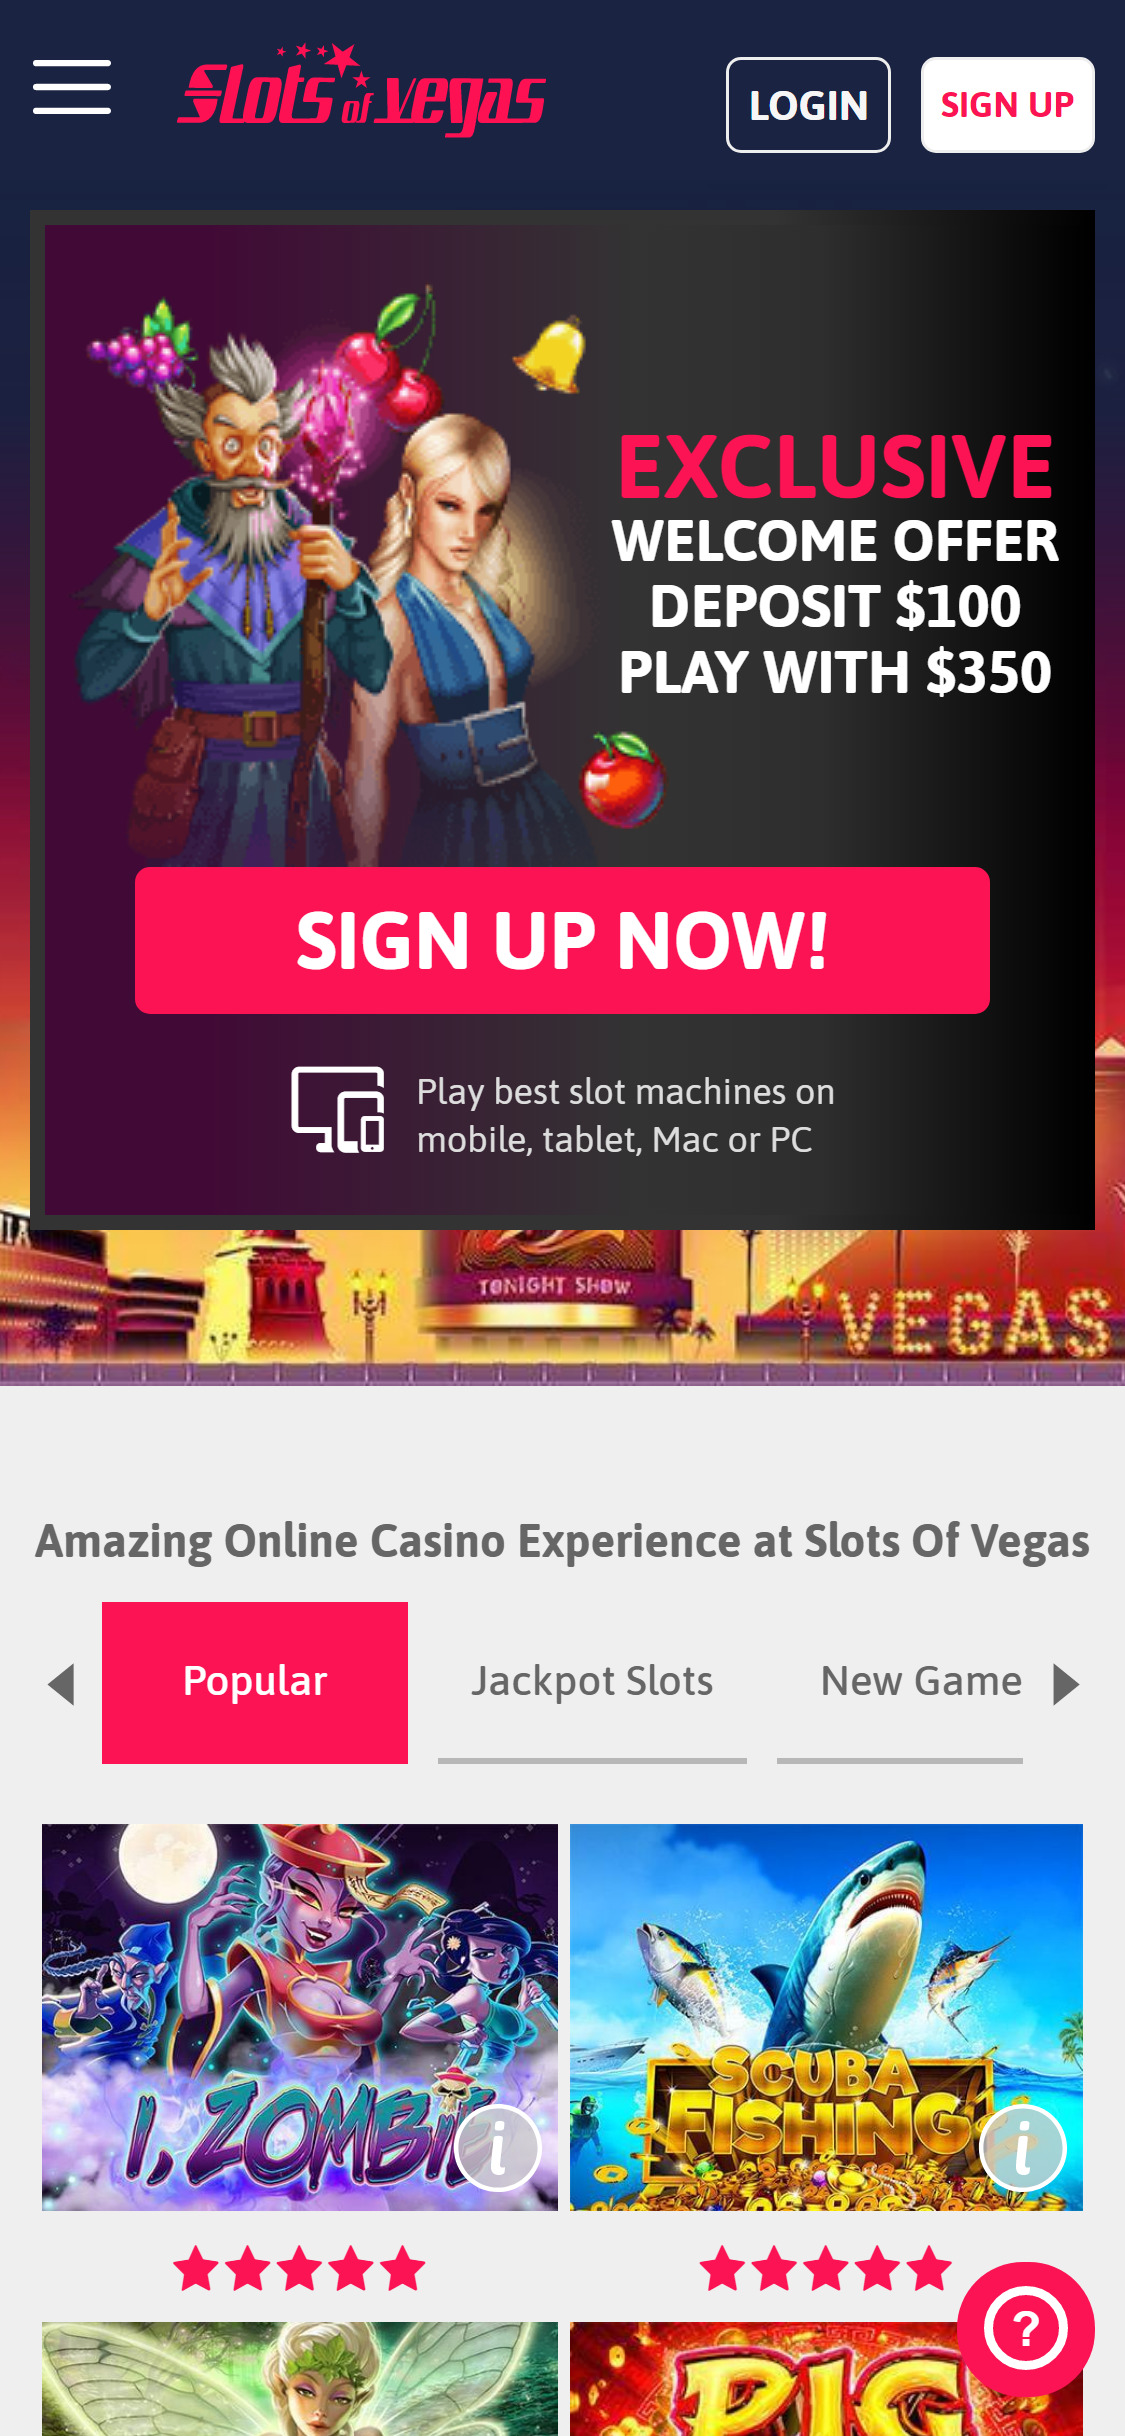 Slots of Vegas Casino Mobile Review